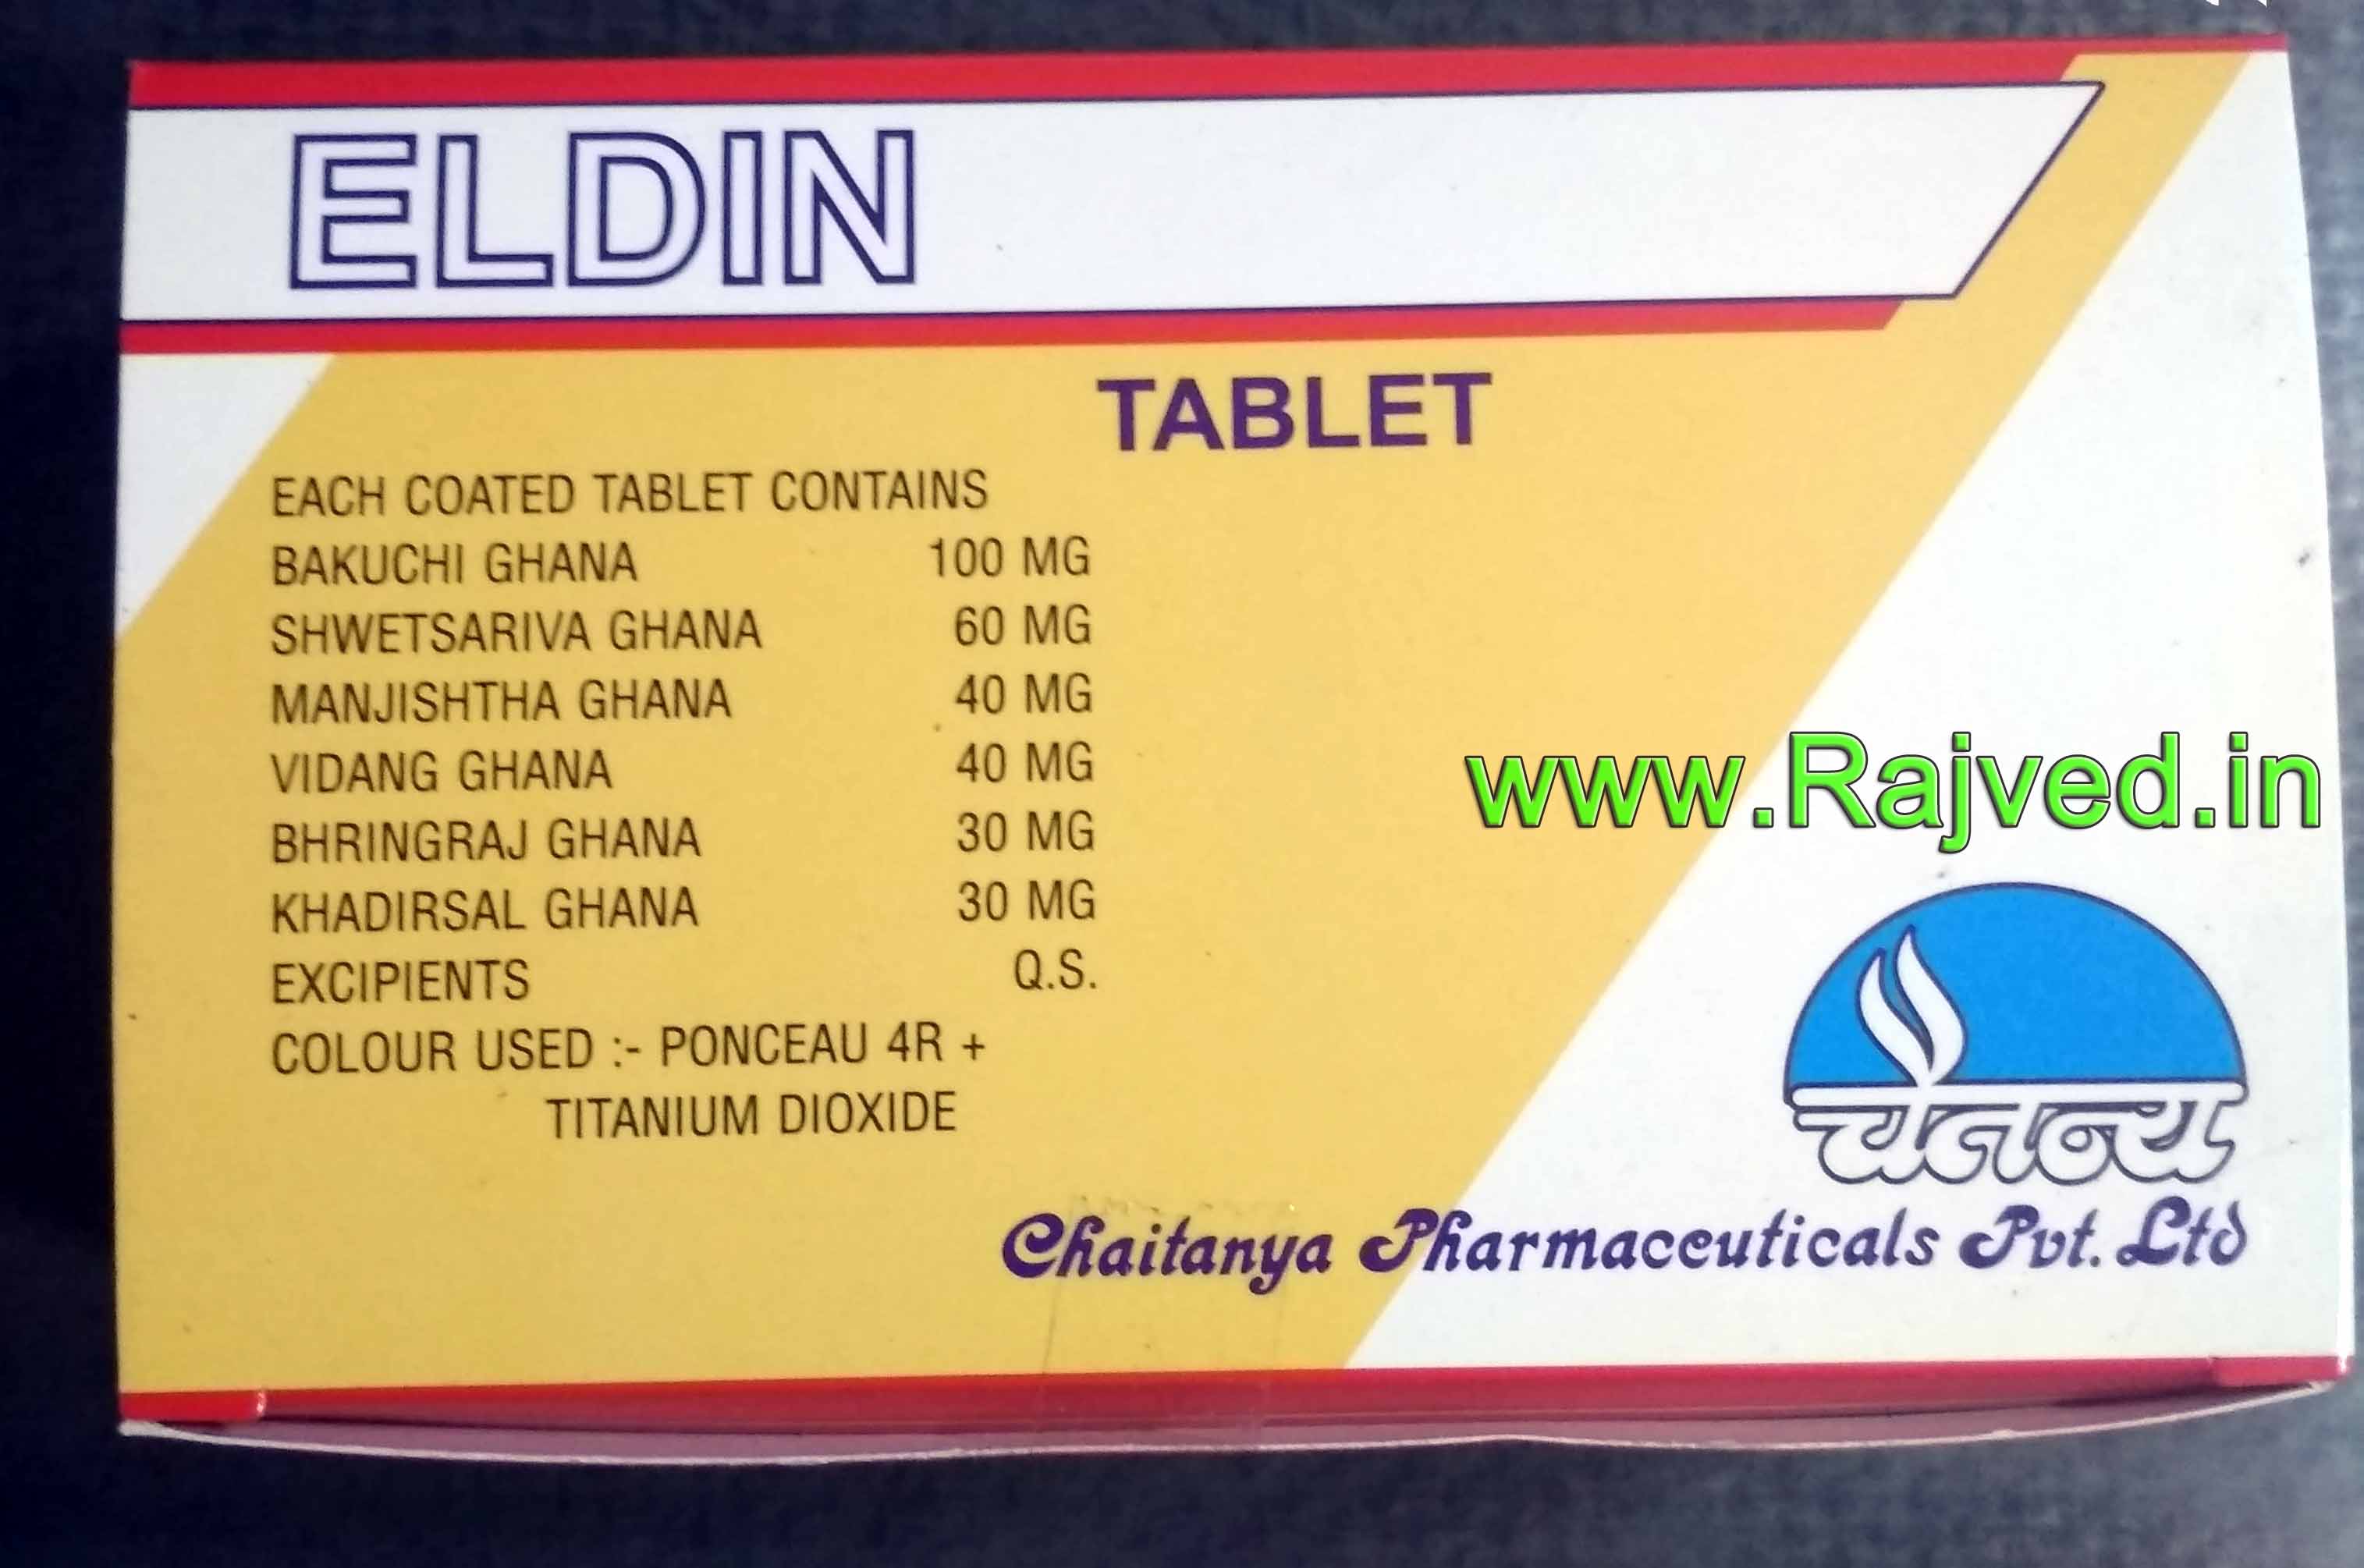 eldin 500 tab upto 20% off free shipping Chaitanya Pharmaceuticals